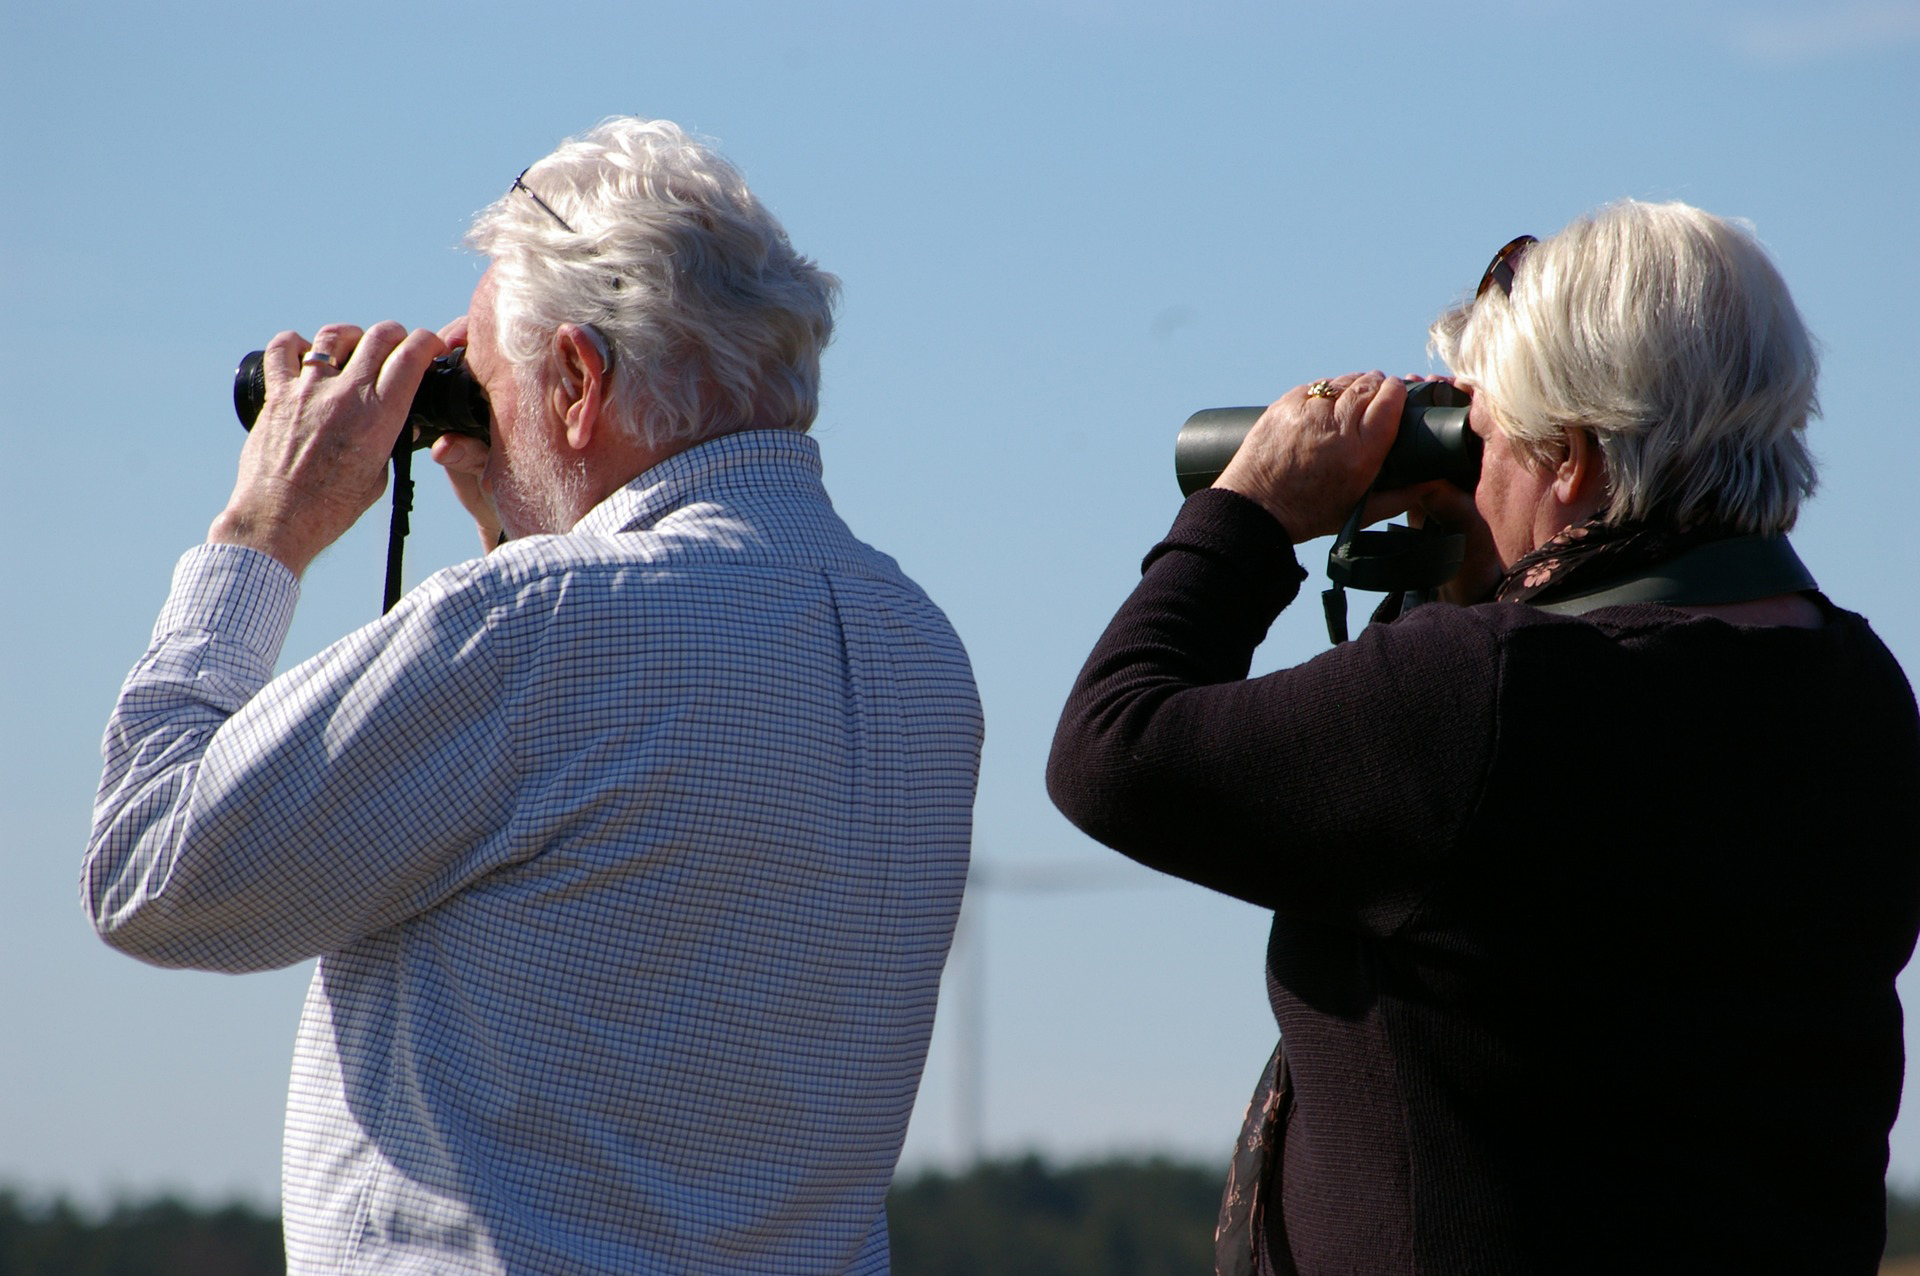 binoculars-2194228_1920